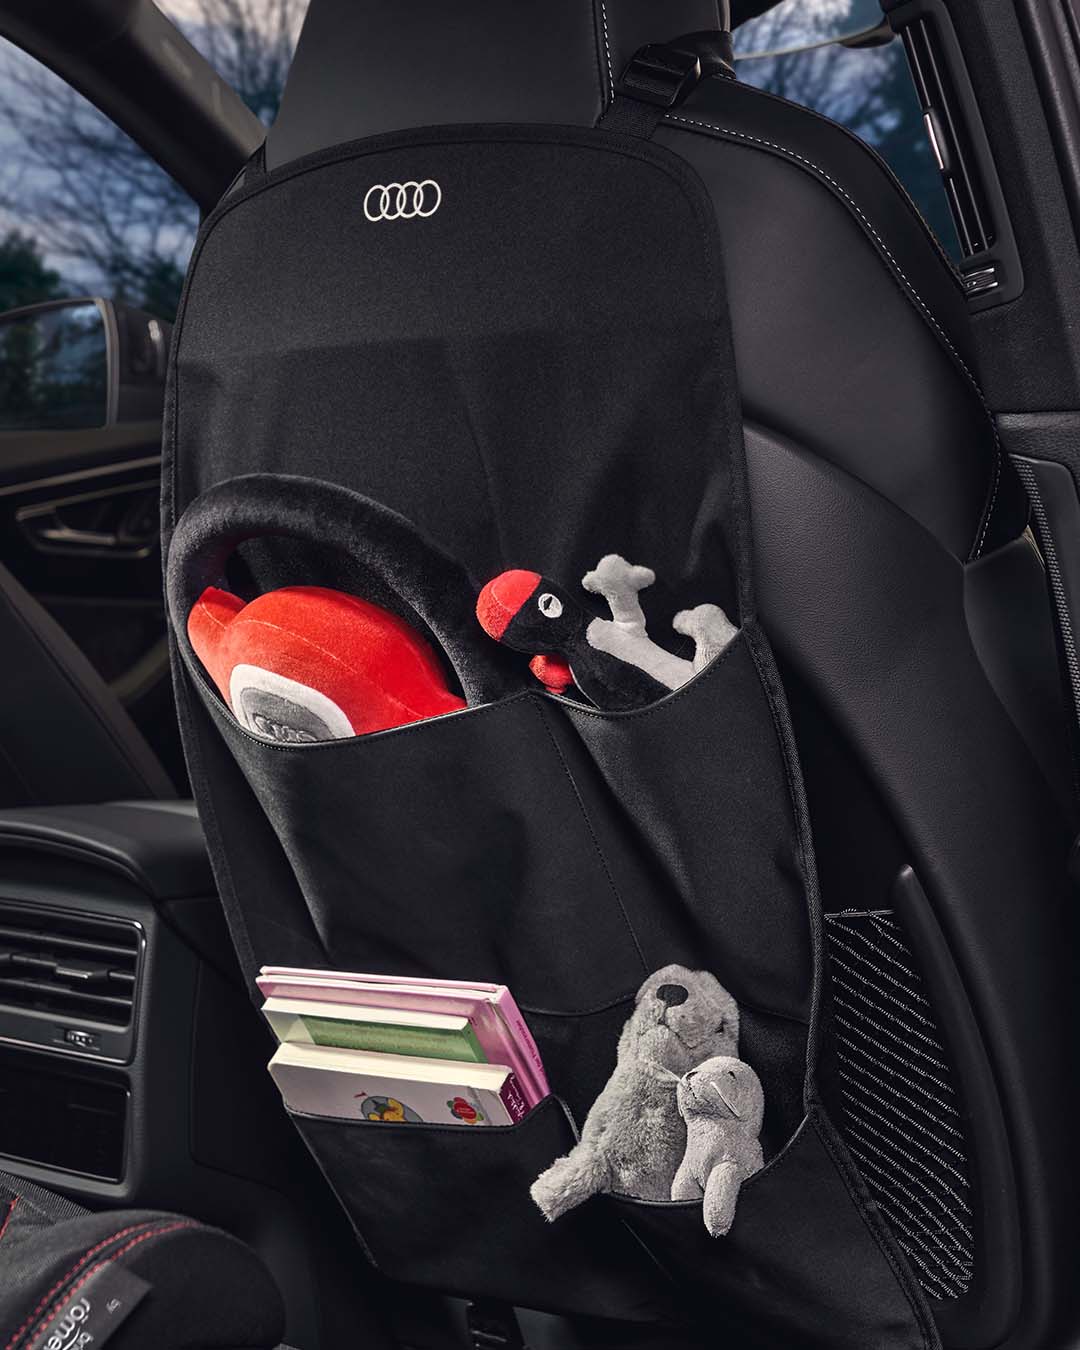 Audi seat cover